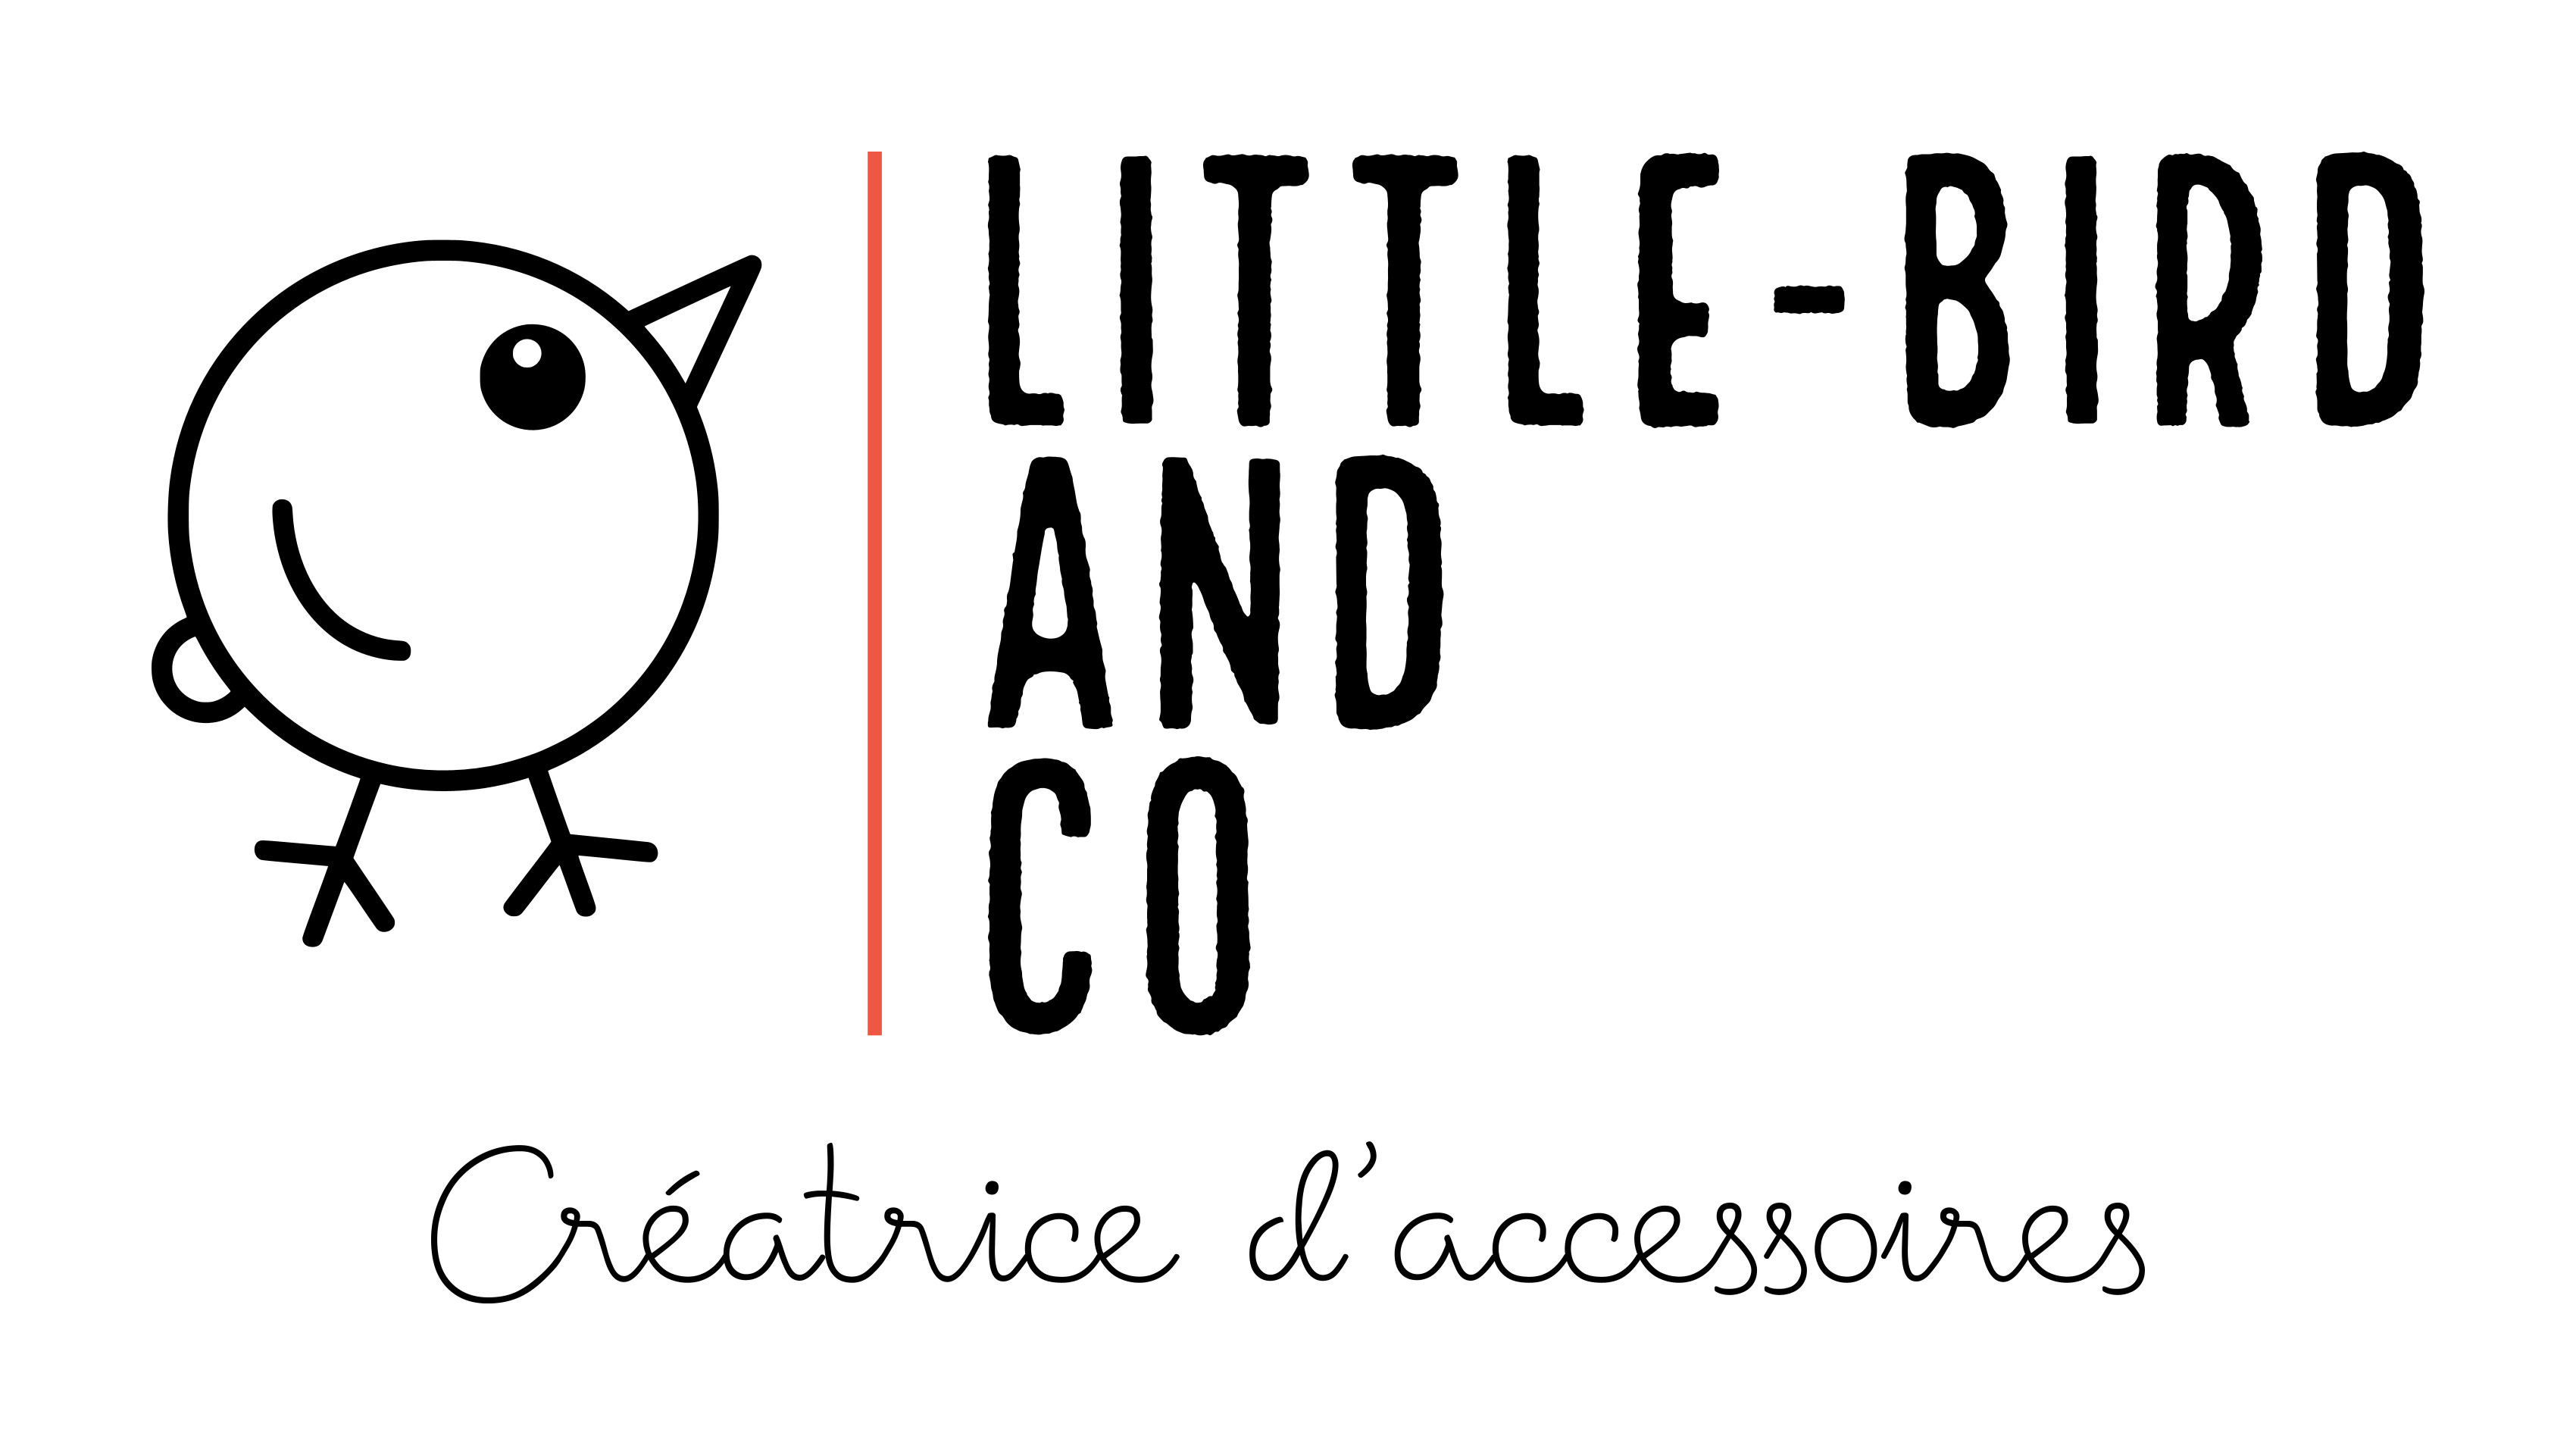 Little-Bird and Co